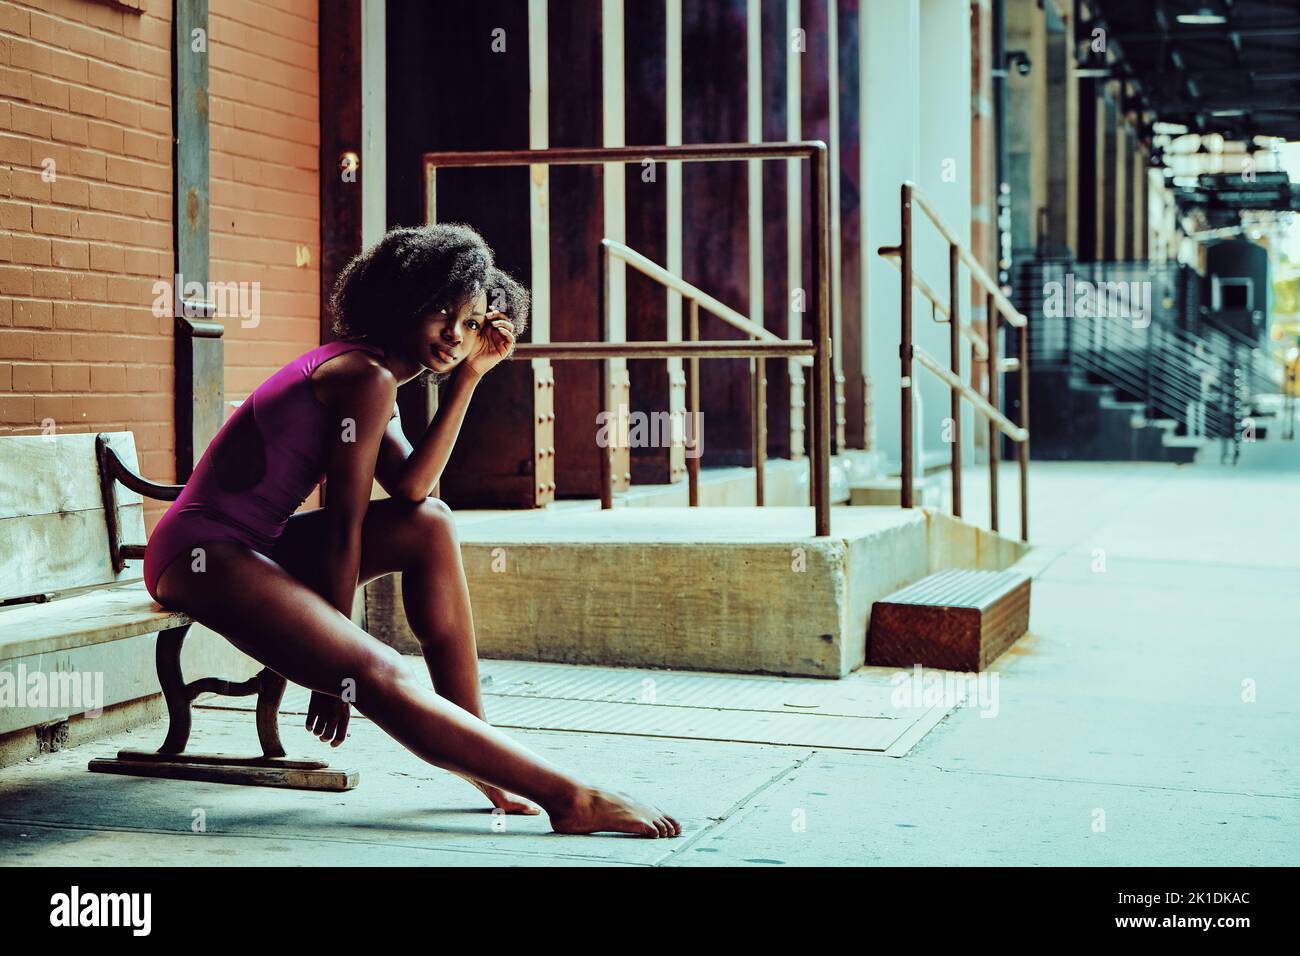 ballerina modern dancer outdoors sitting on a bench Stock Photo